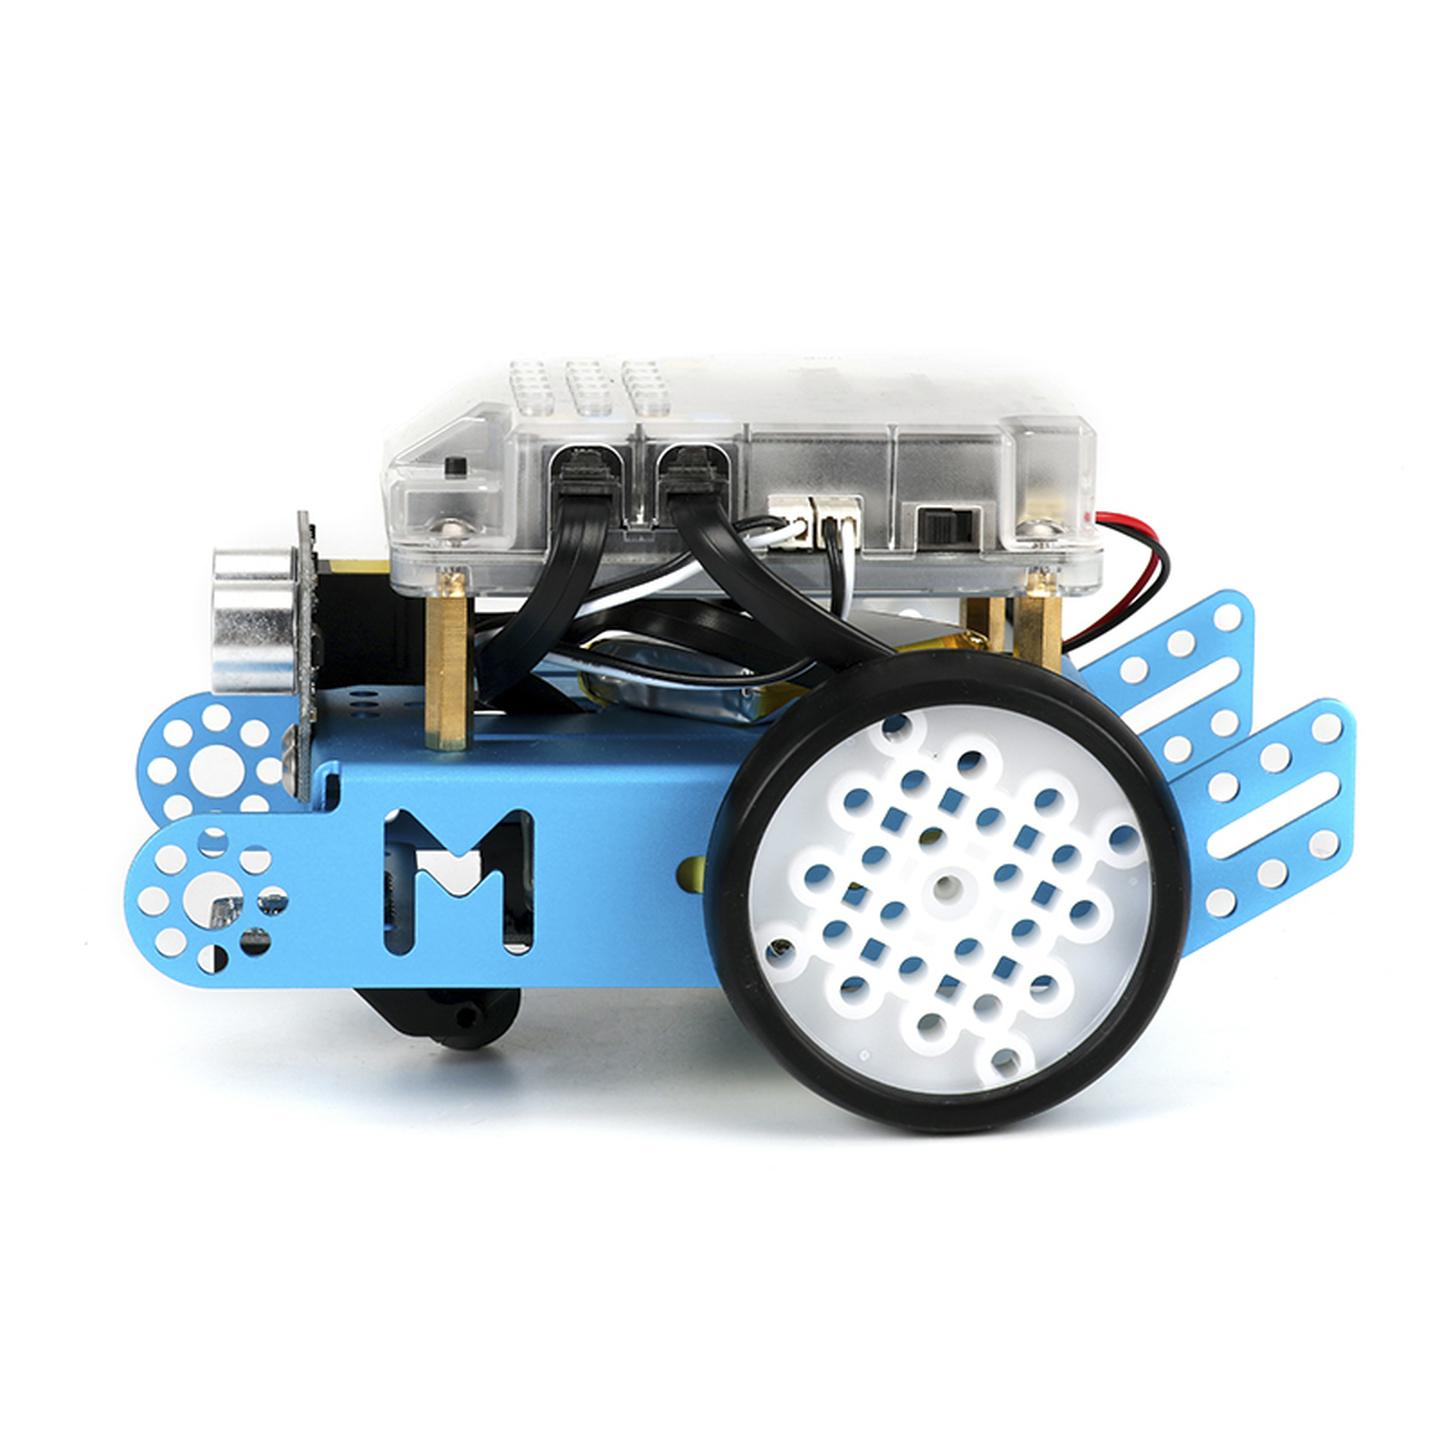 Makeblock mBot Blue Robot Kit